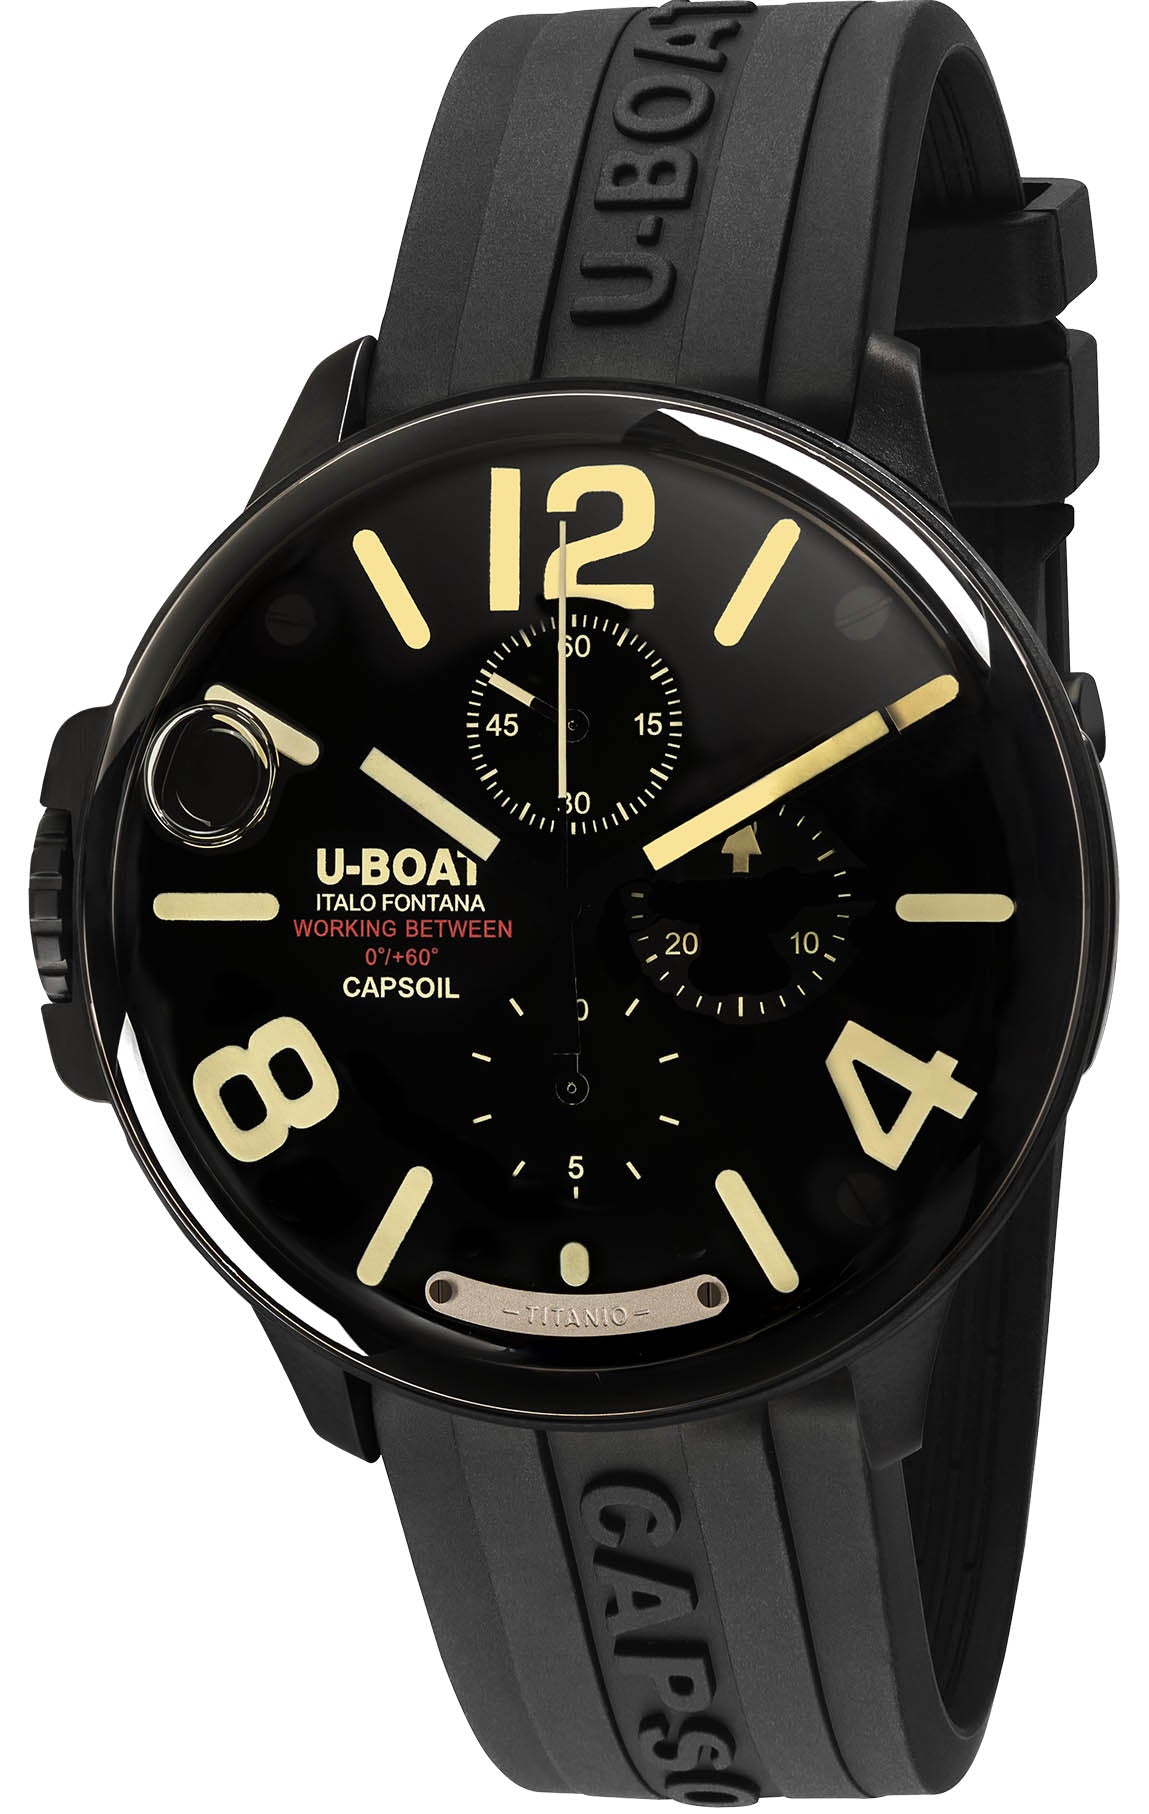 Photos - Wrist Watch U-Boat Watch Capsoil Titanio Limited Edition D UB-1036 